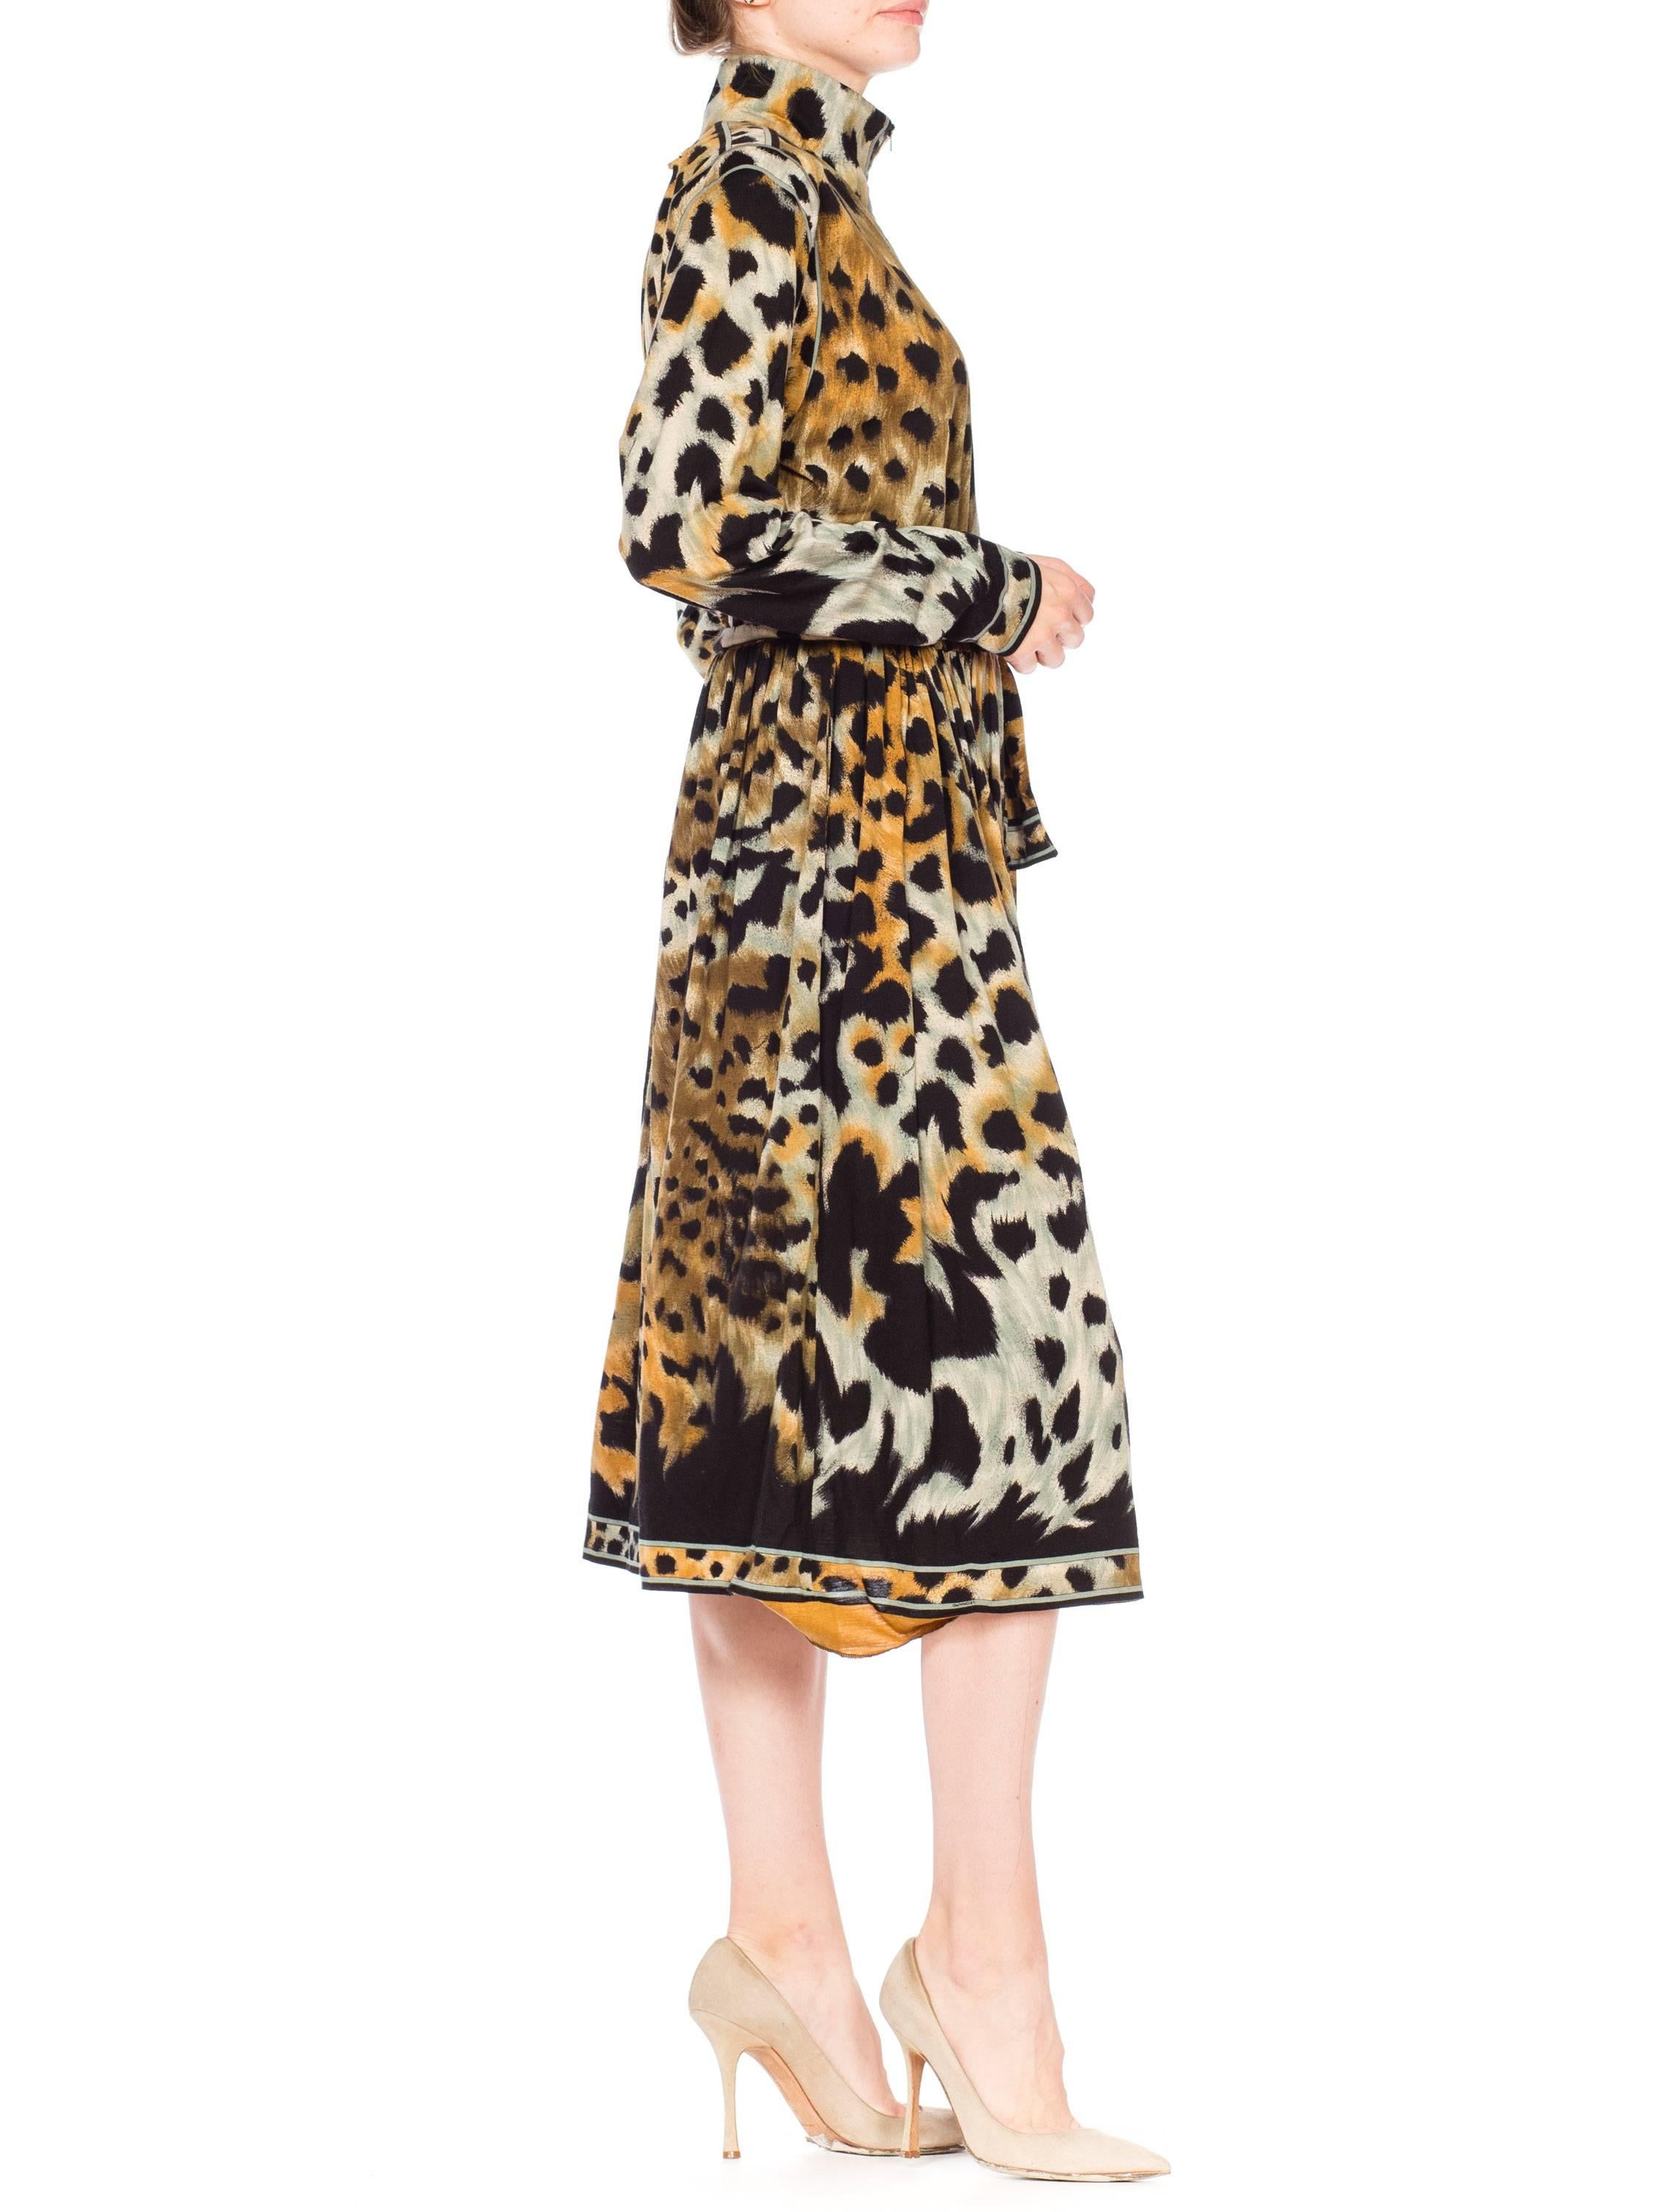 Leopard Print Leonard French Jersey Dress 1